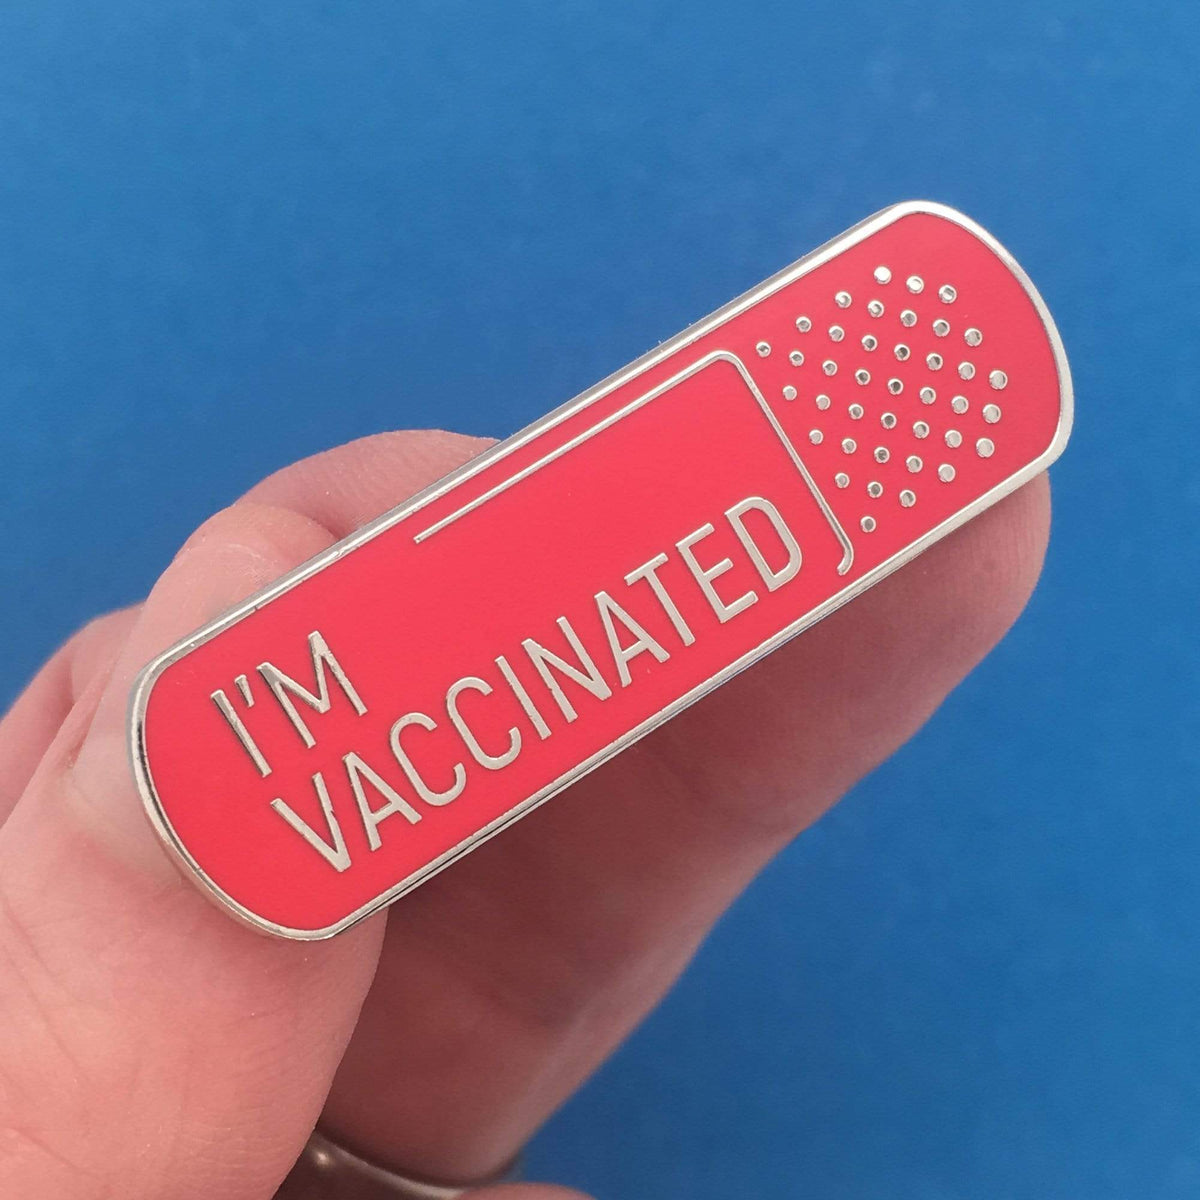 I&#39;m Vaccinated Band-aid Pin